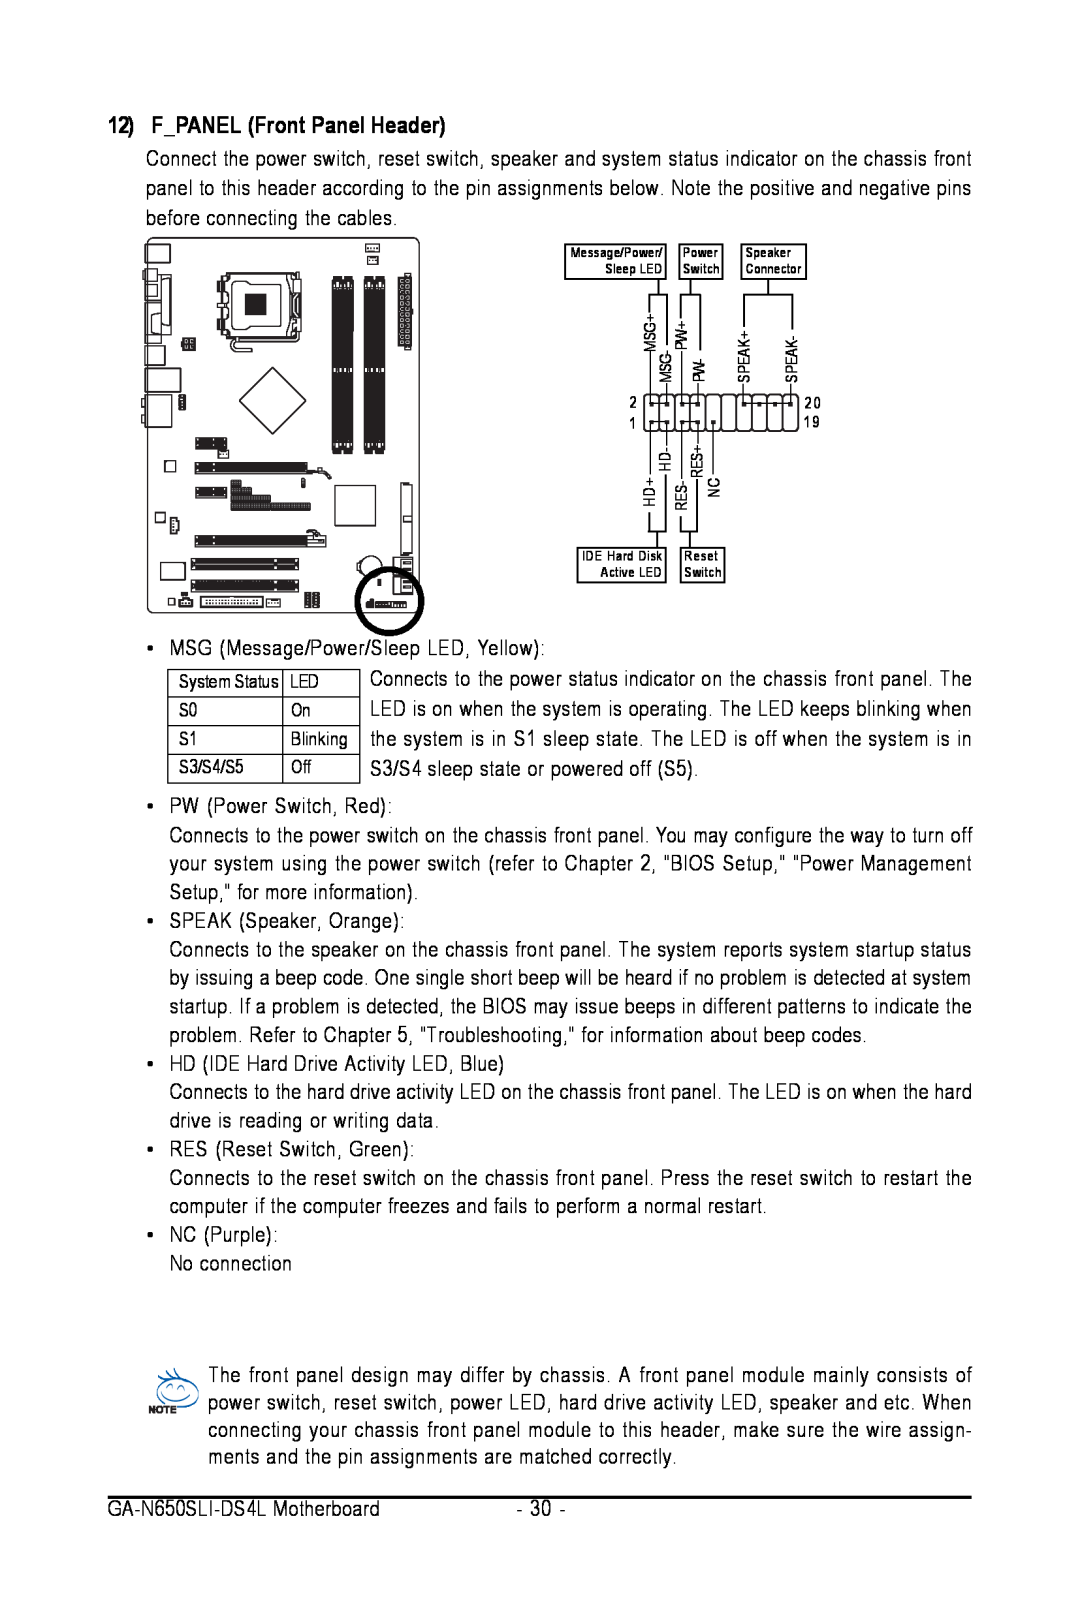 Intel GA-N650SLI-DS4L user manual FPANEL Front Panel Header 